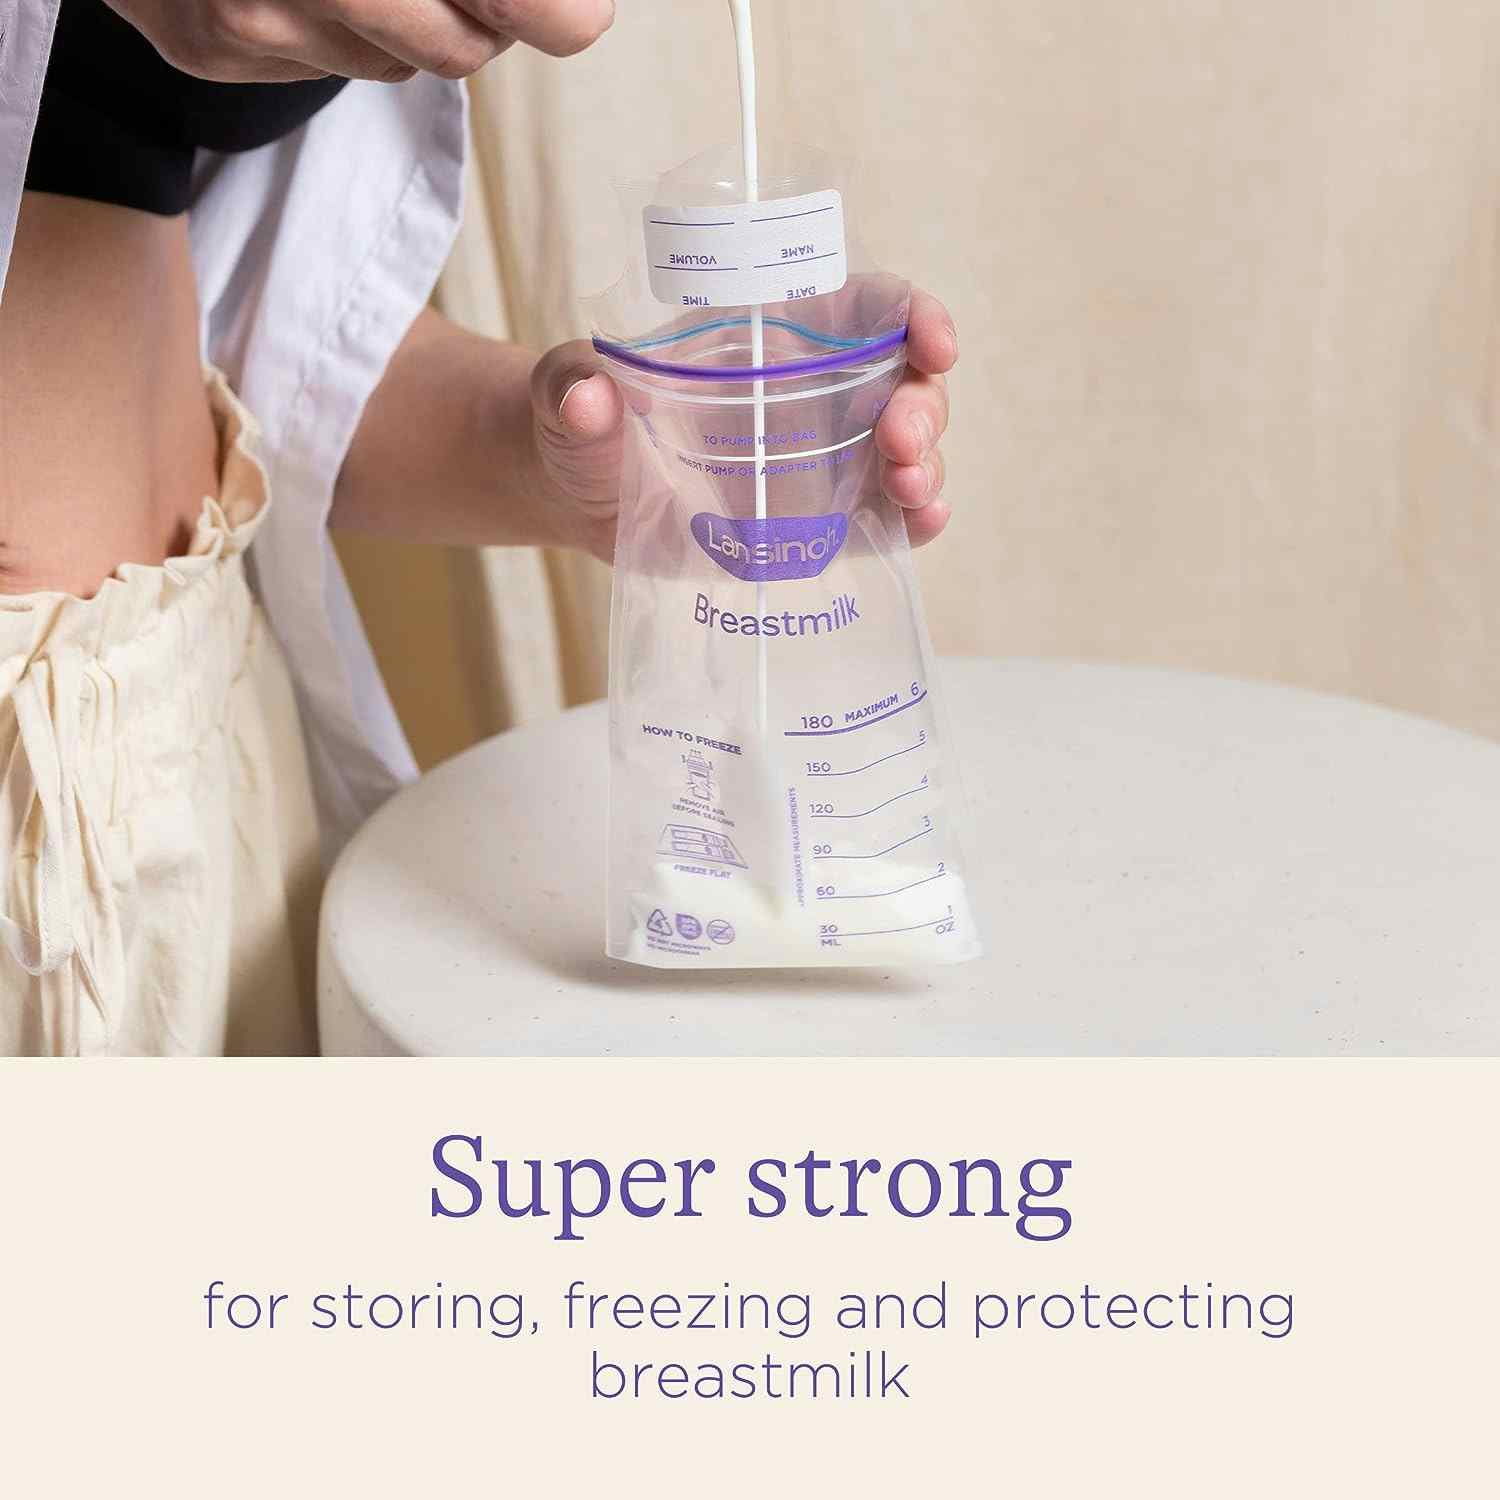 Lansinoh Breast Milk Clear Storage Bag, 6 oz.